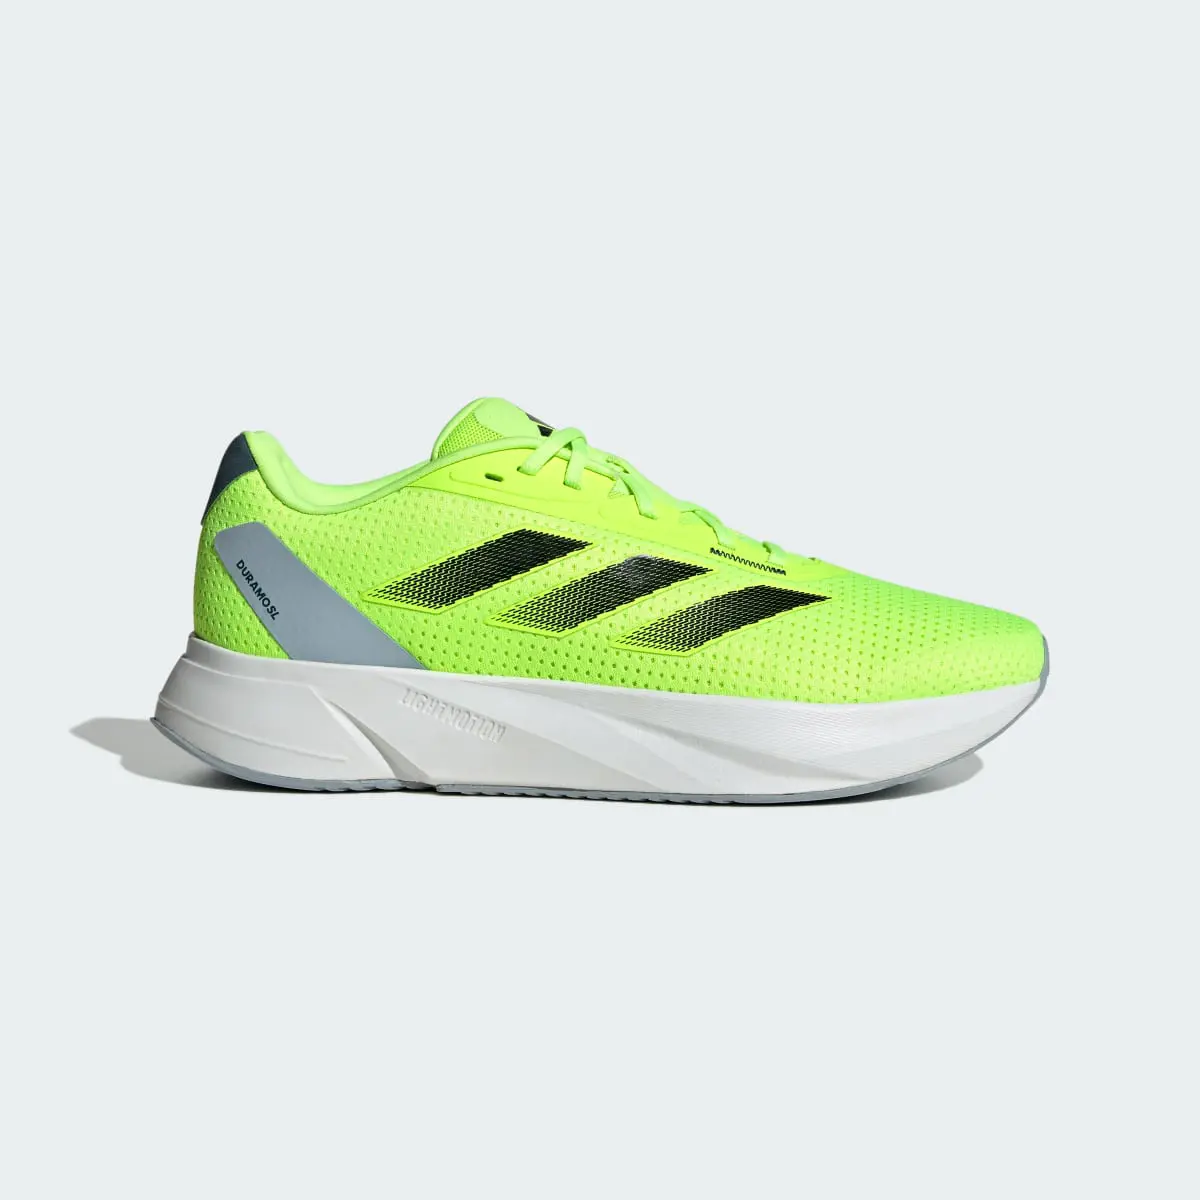 Adidas Duramo SL Ayakkabı. 2